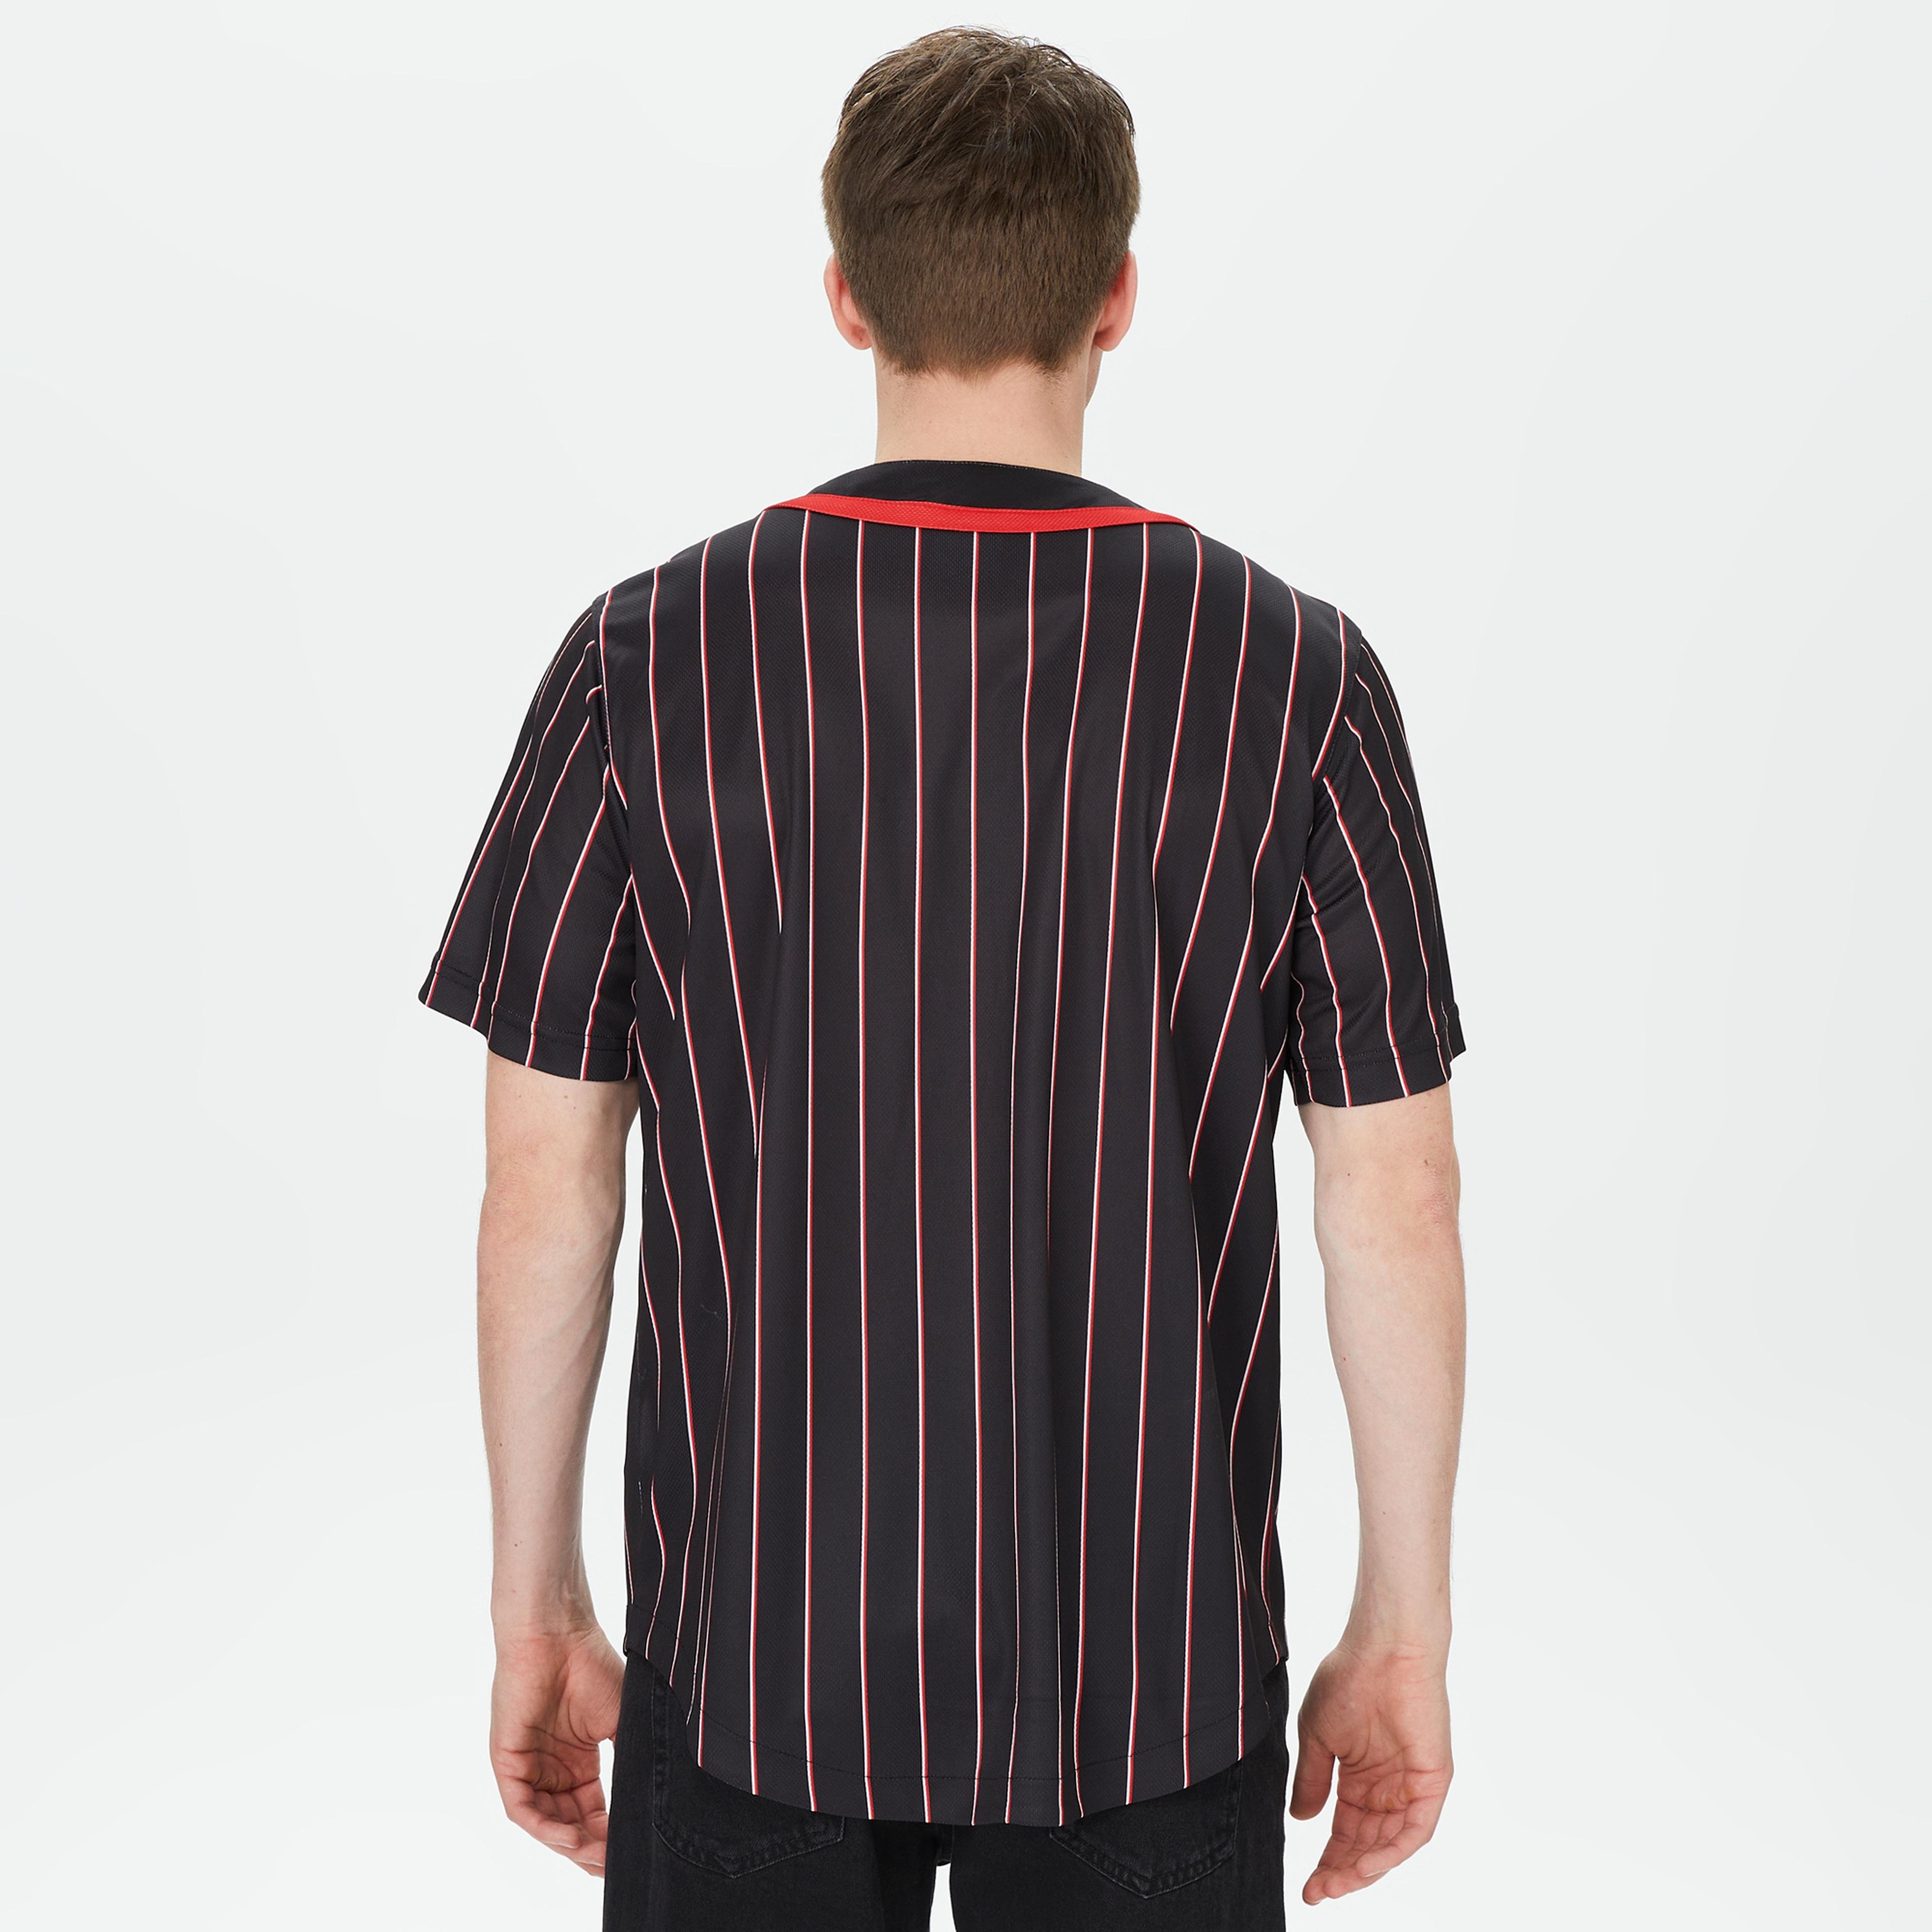 Karl Kani Serif Pinstripe Baseball Erkek Siyah/Kırmızı/Beyaz Gömlek